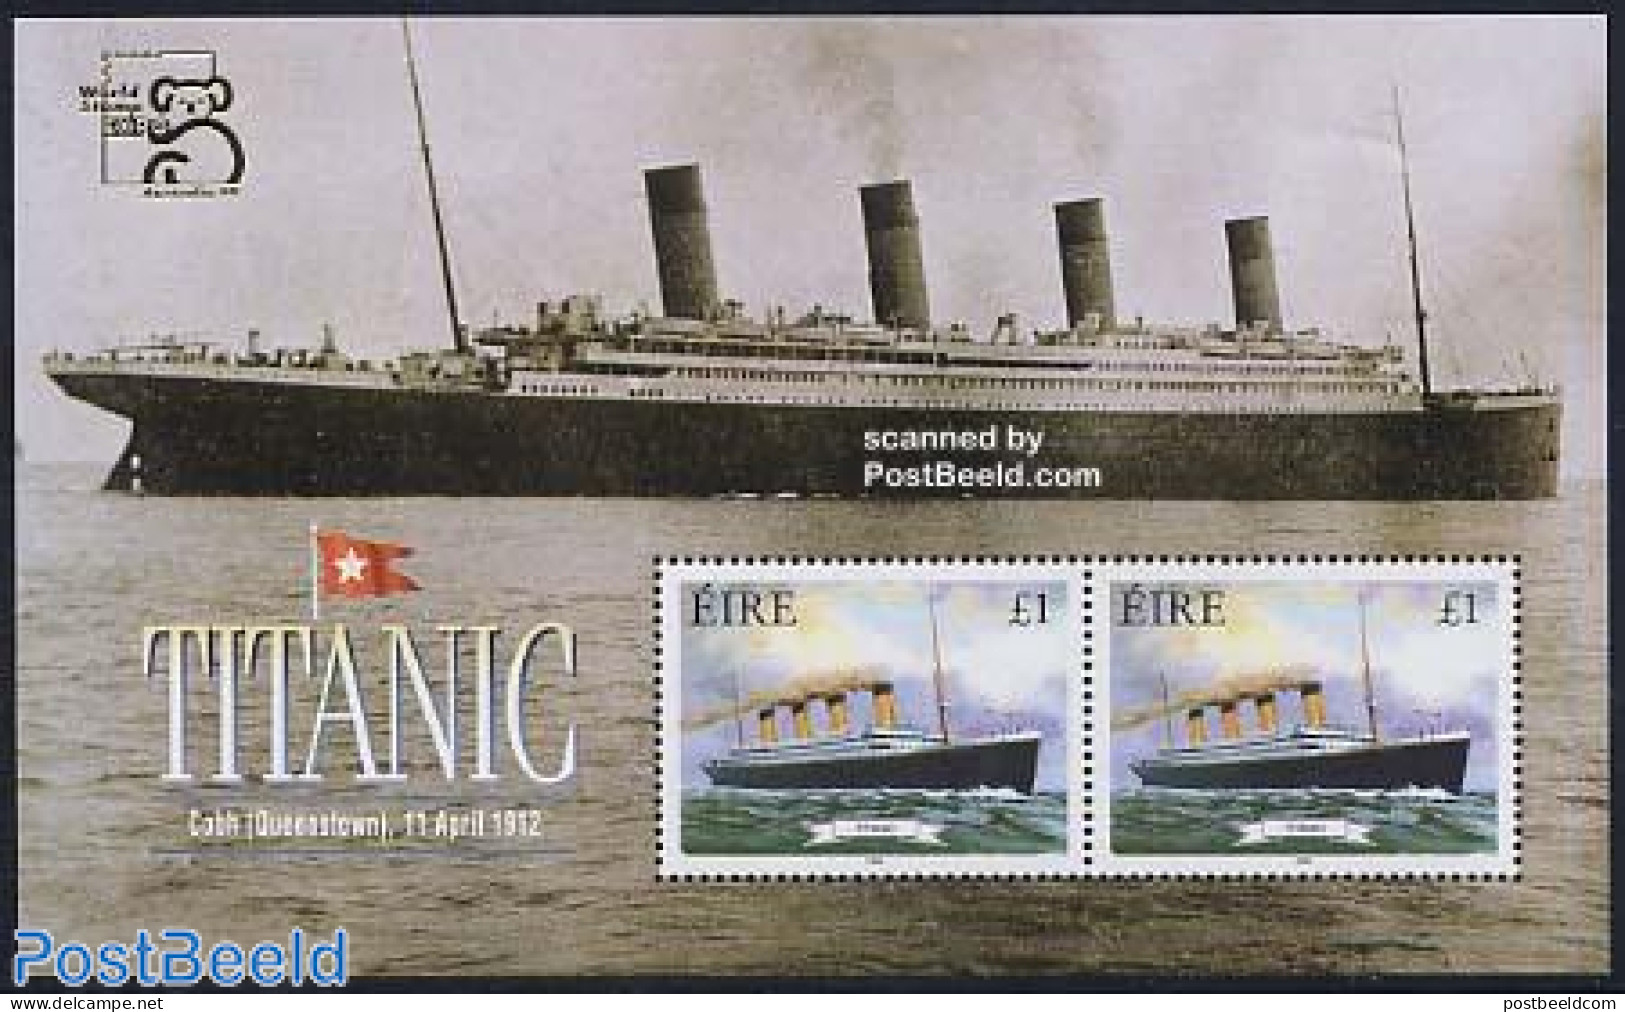 Ireland 1999 Australia 99 S/s, Mint NH, Transport - Philately - Ships And Boats - Titanic - Ungebraucht